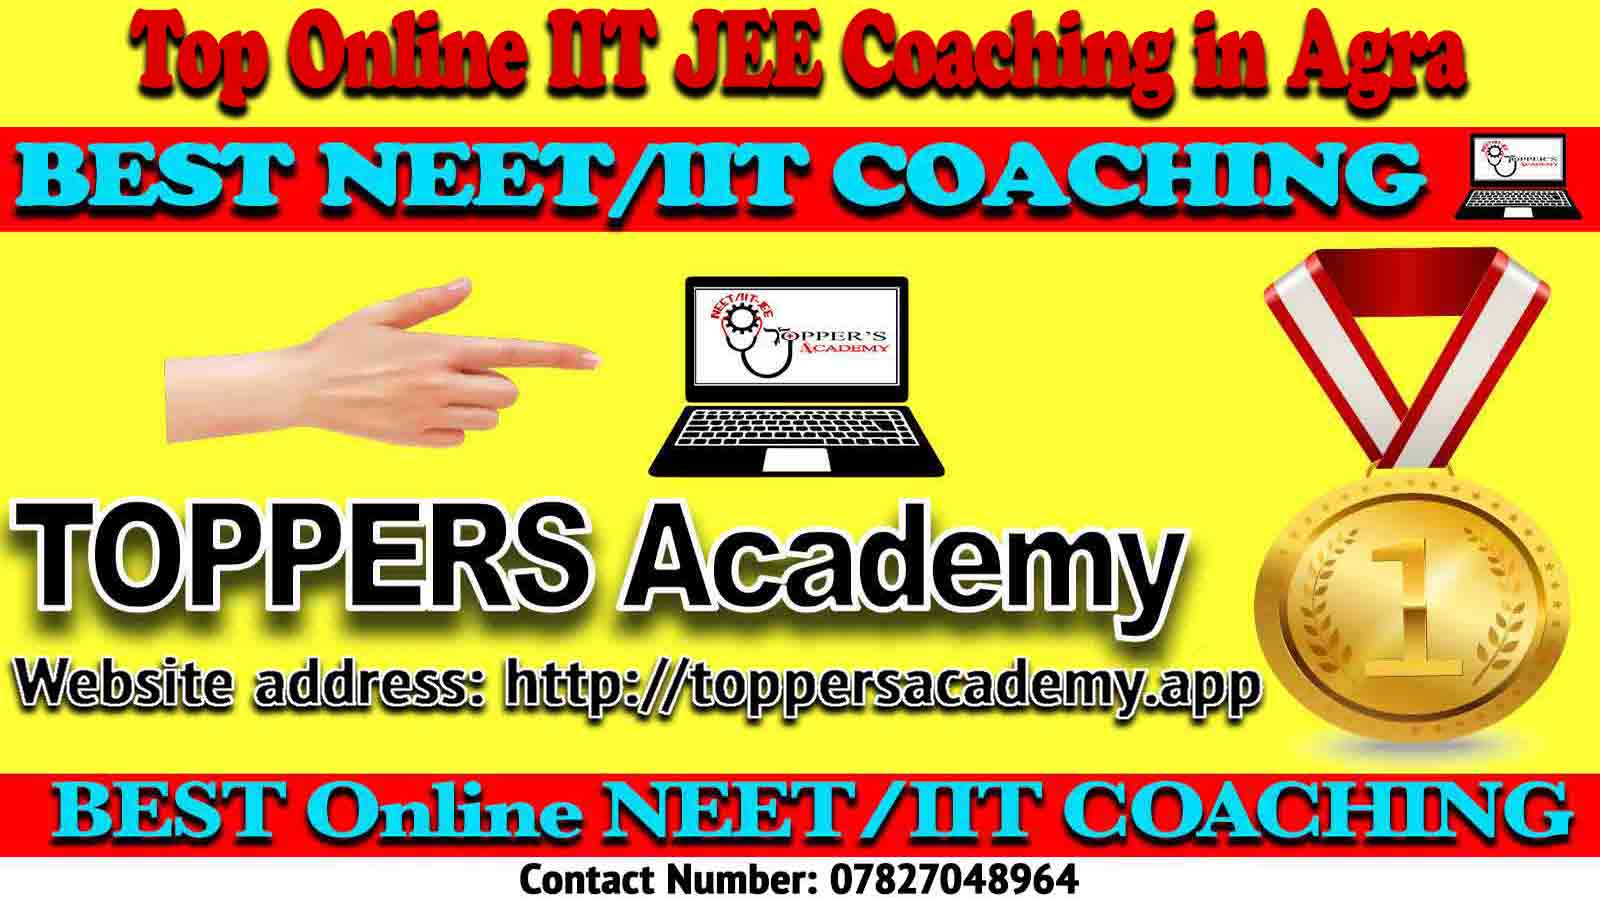 Best Online IIT JEE Coaching in Agra